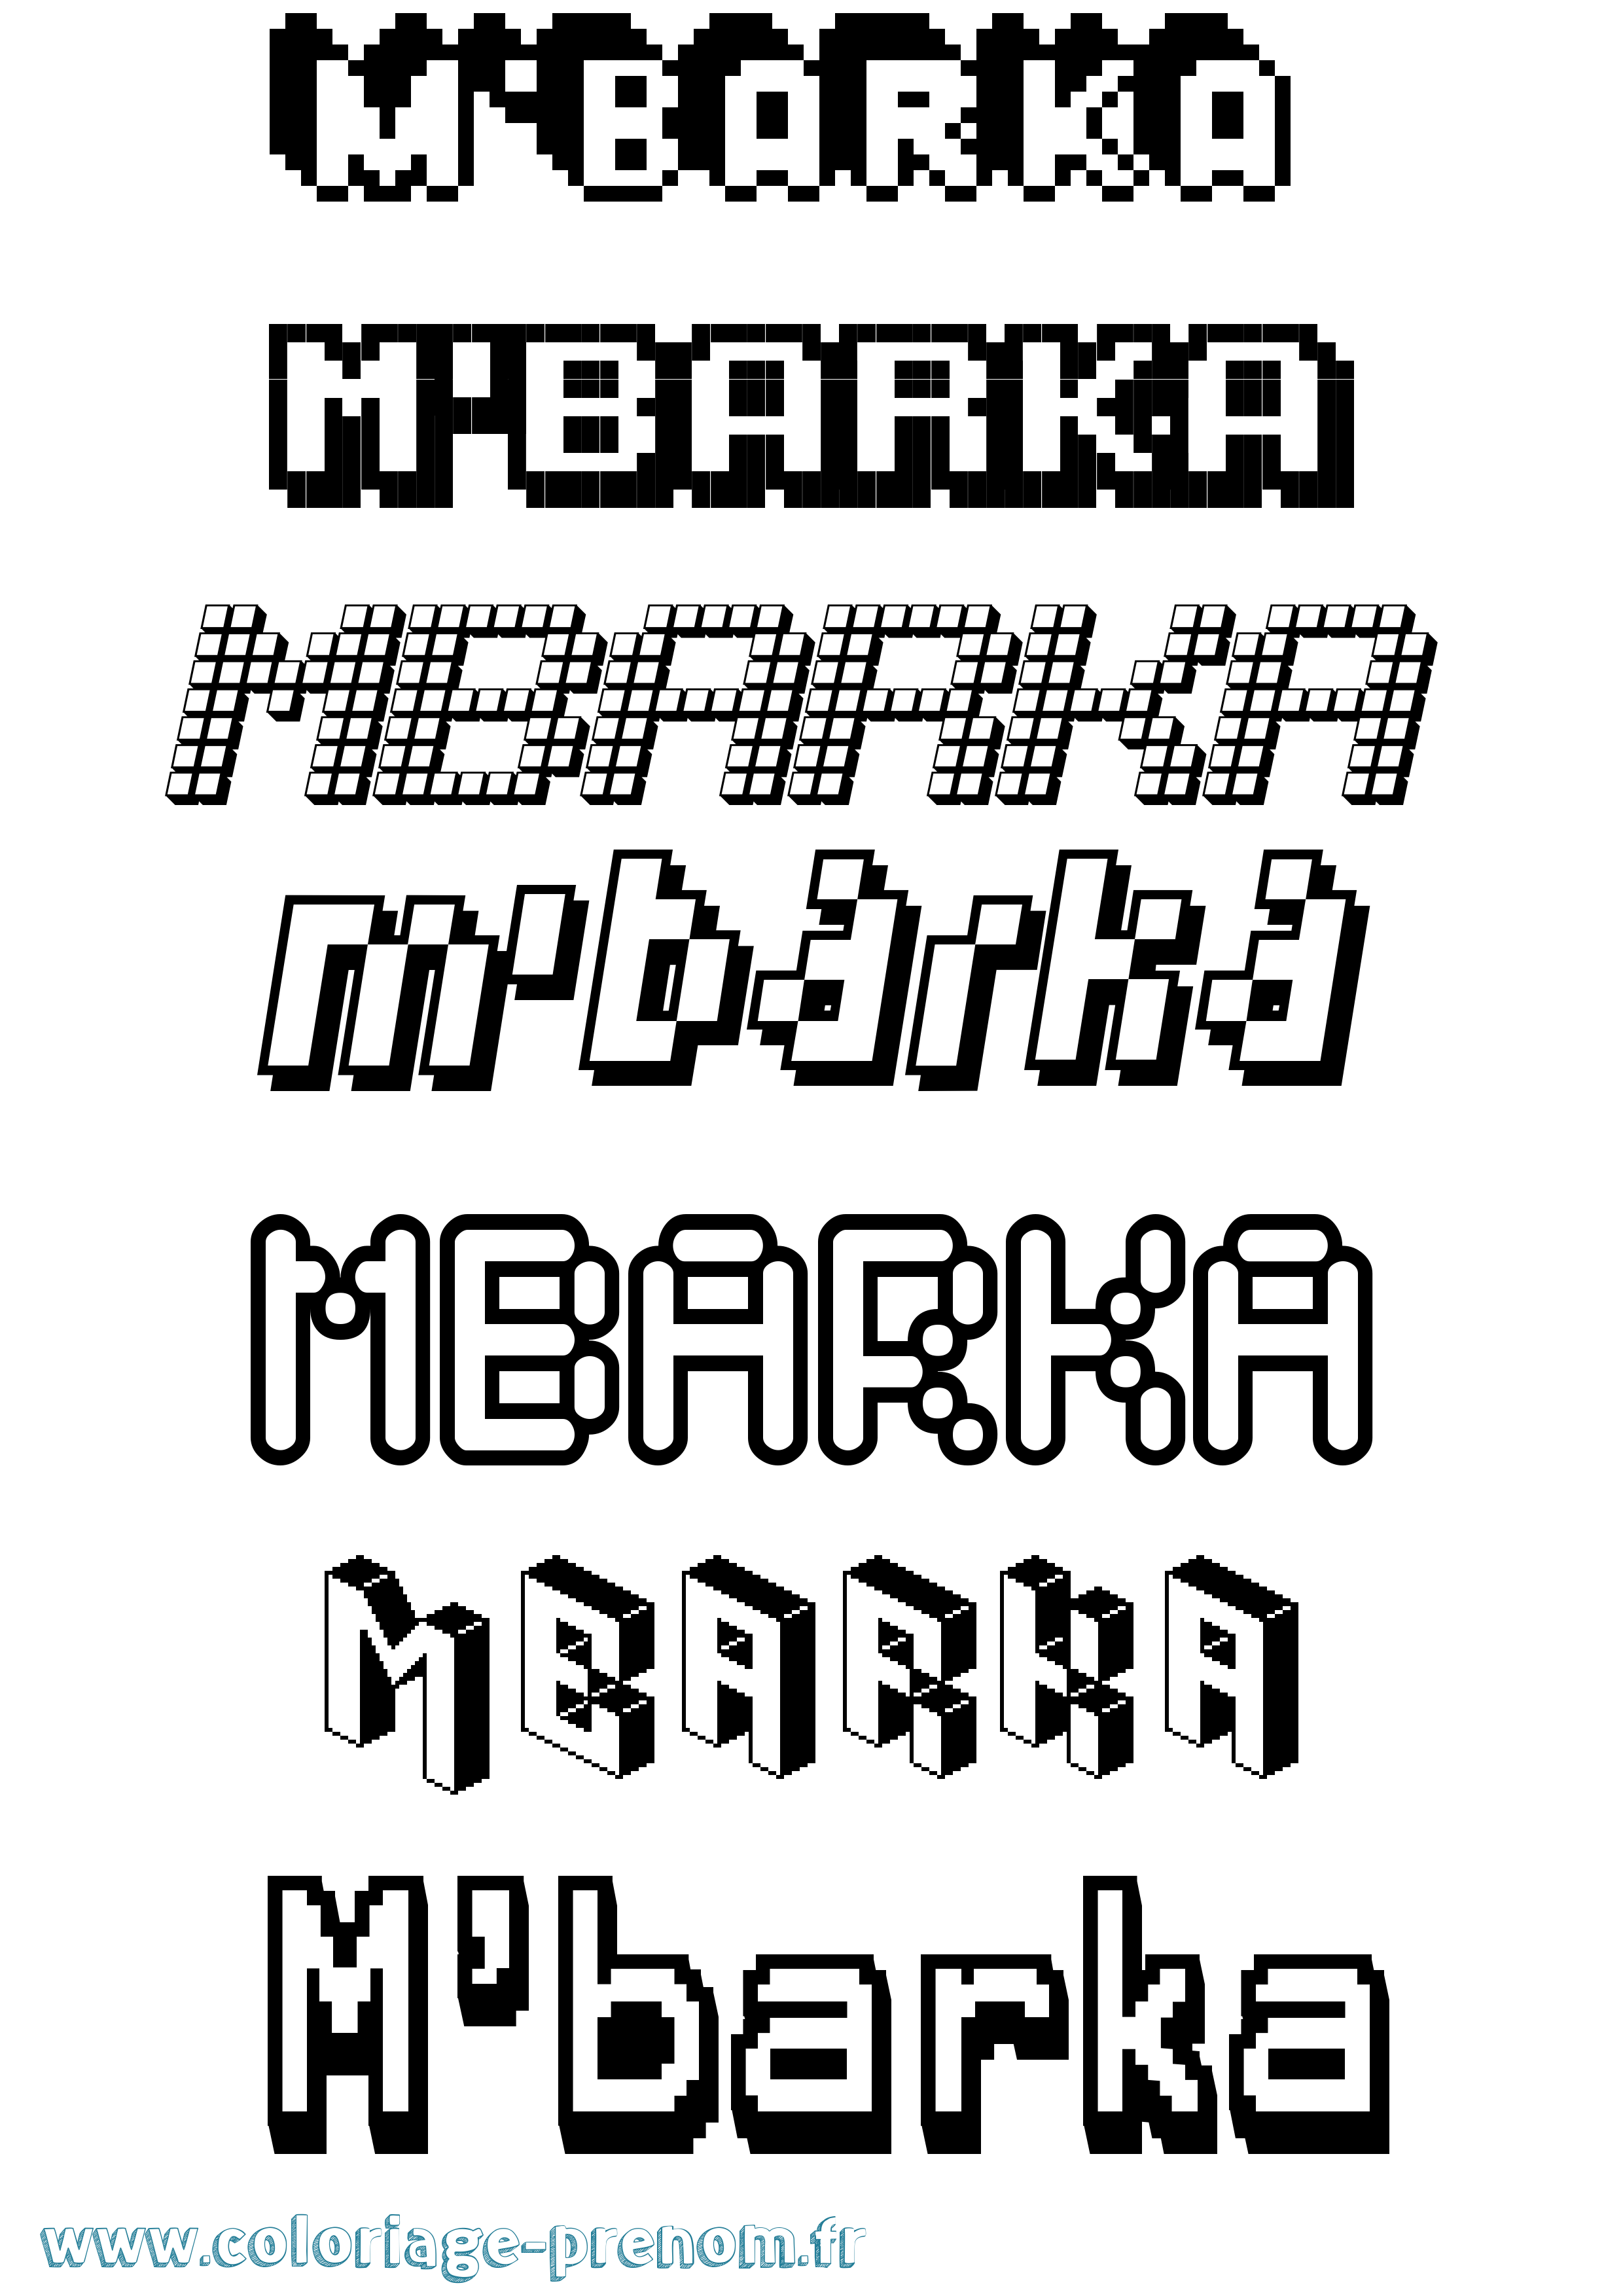 Coloriage prénom M'Barka Pixel